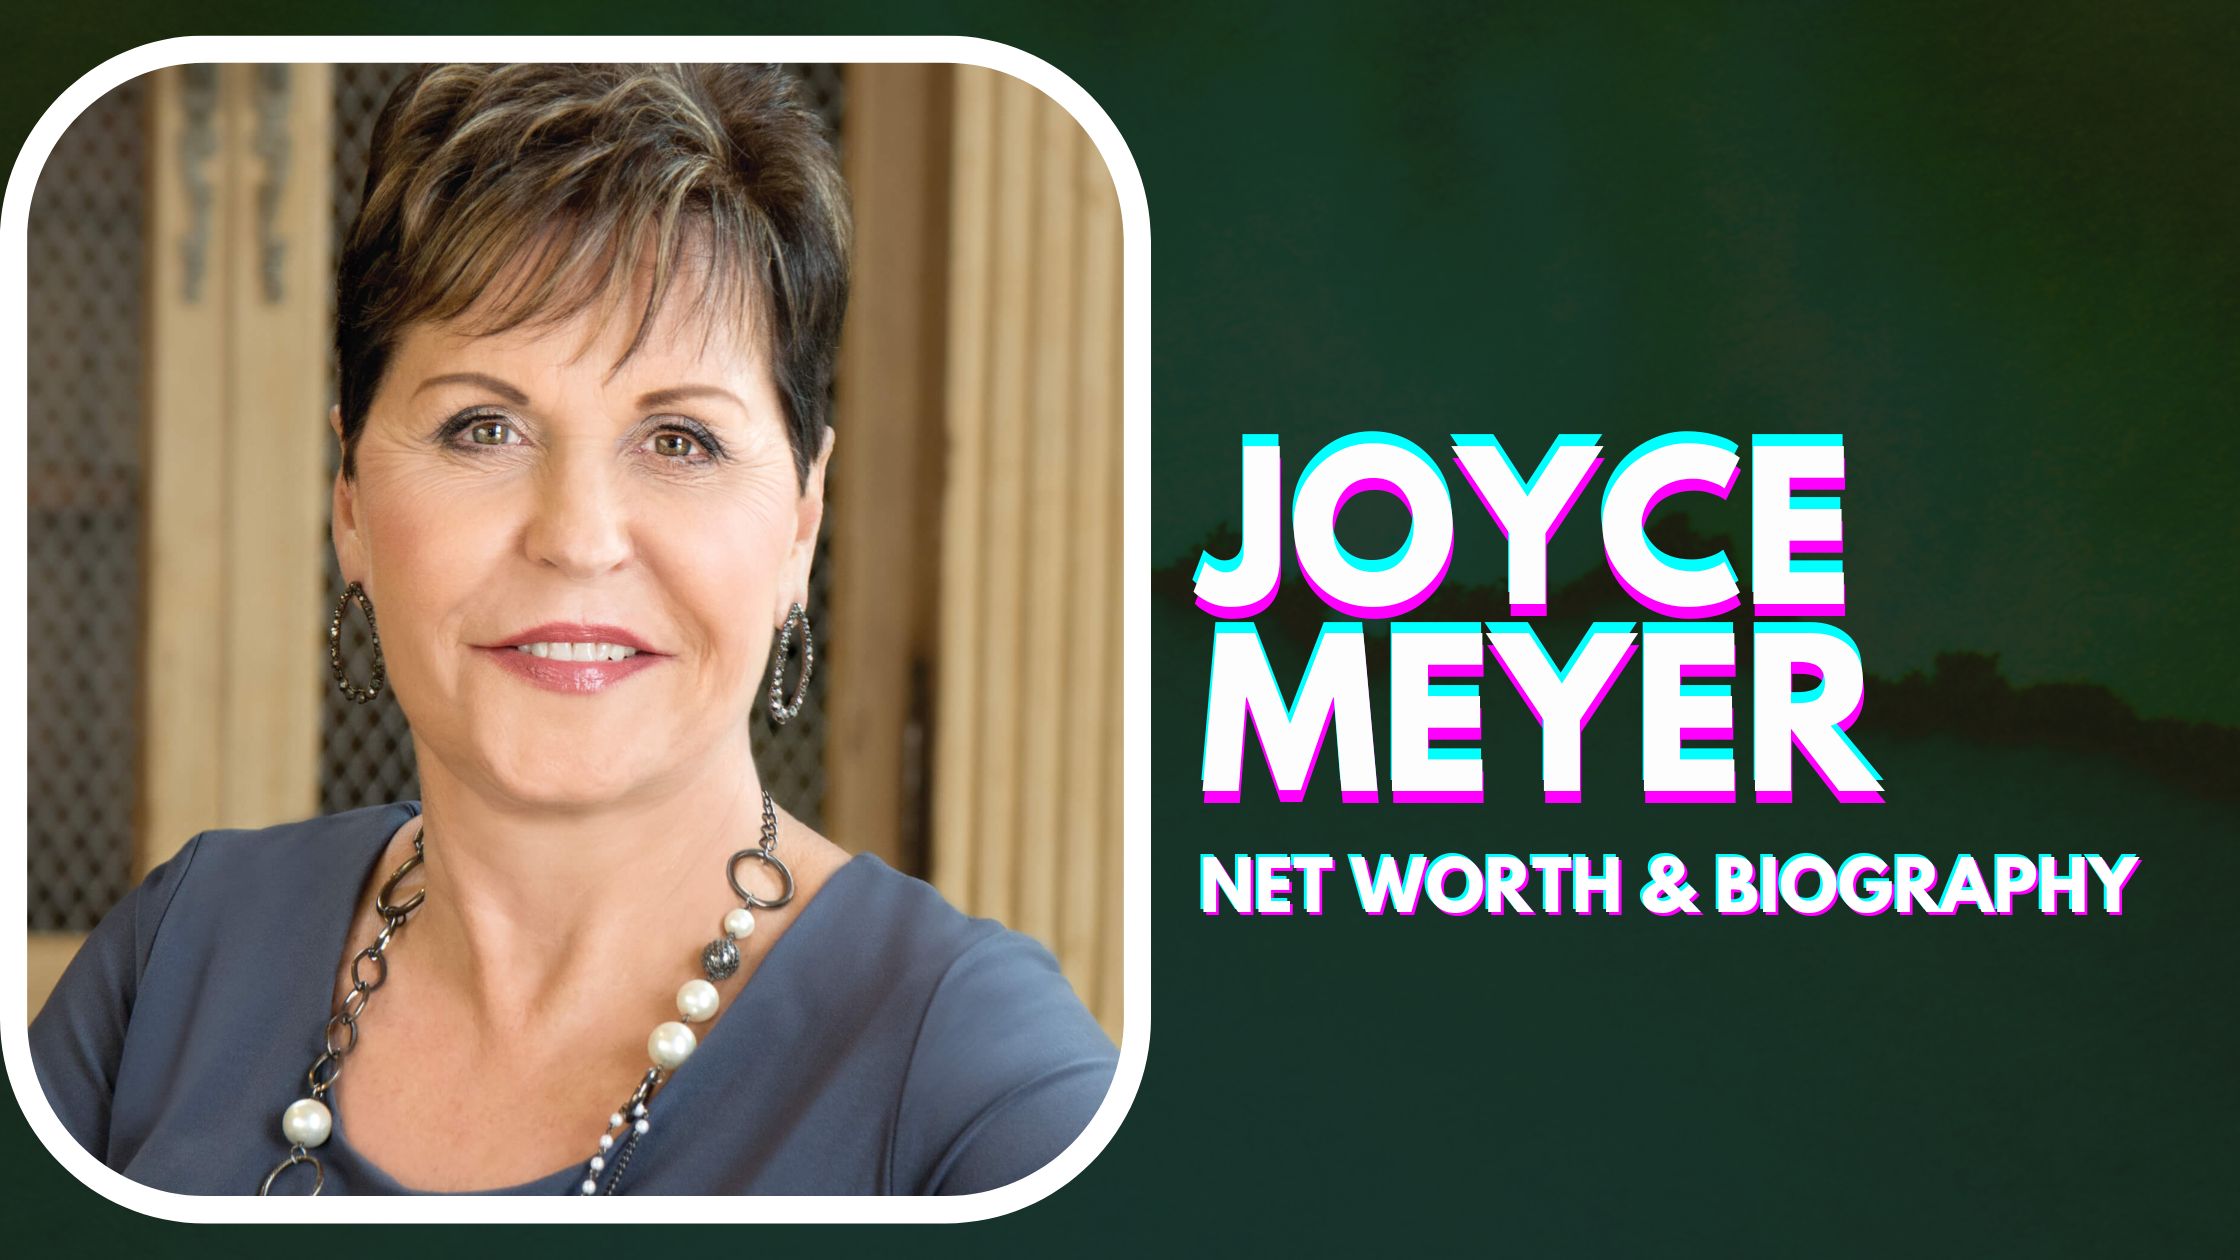 Joyce Meyer Net Worth, and Biography